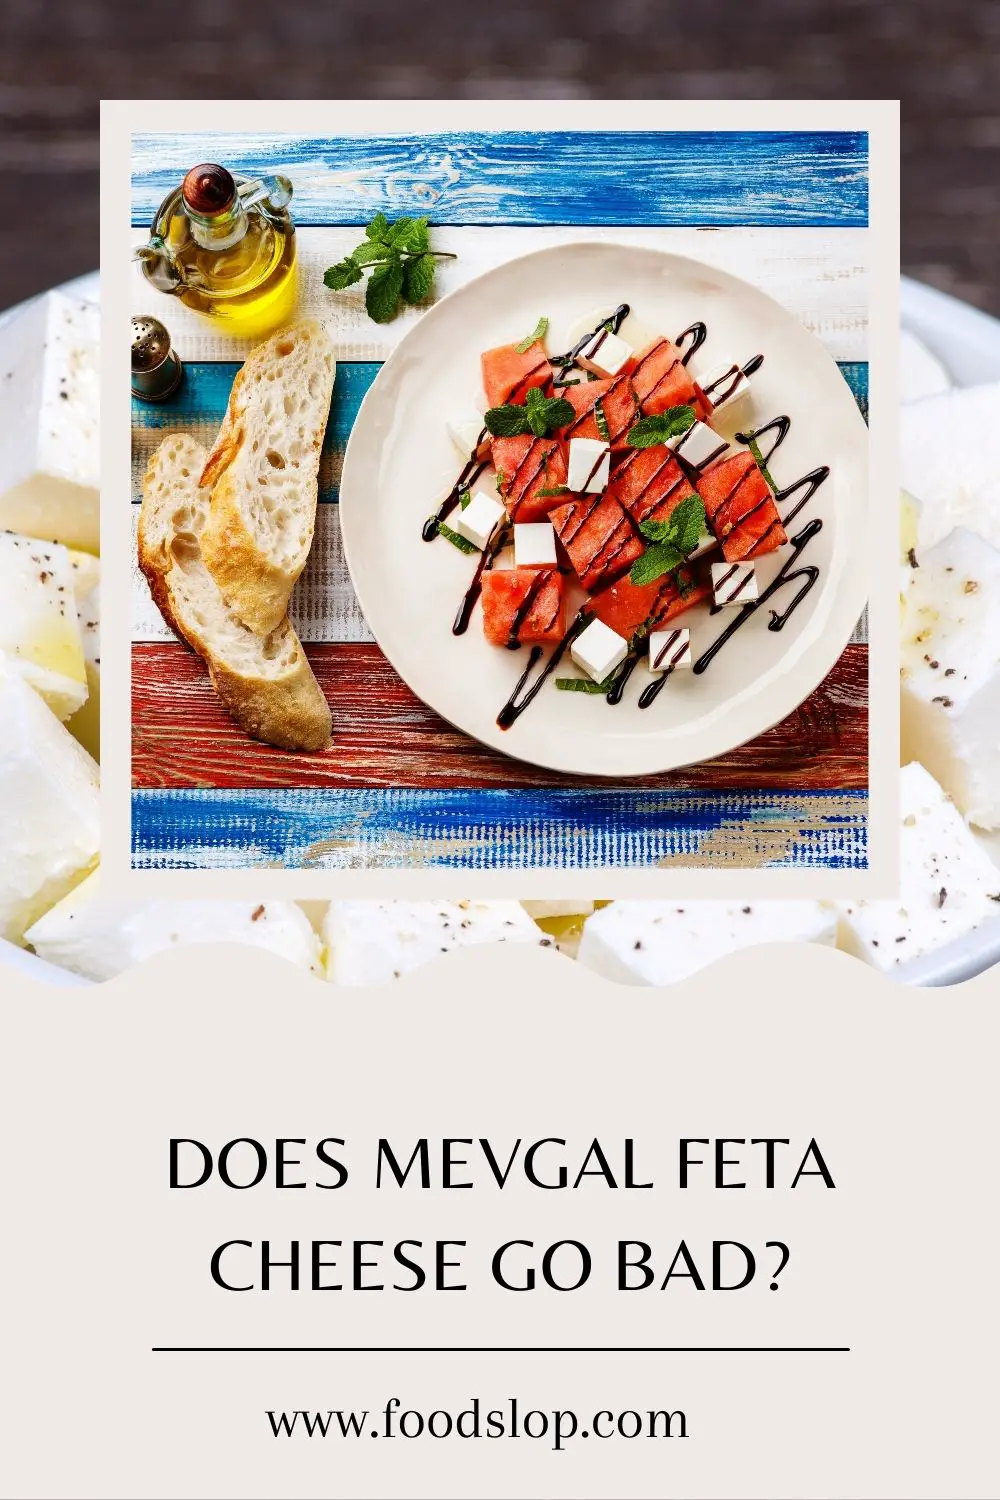 Does Mevgal Feta Cheese Go Bad?